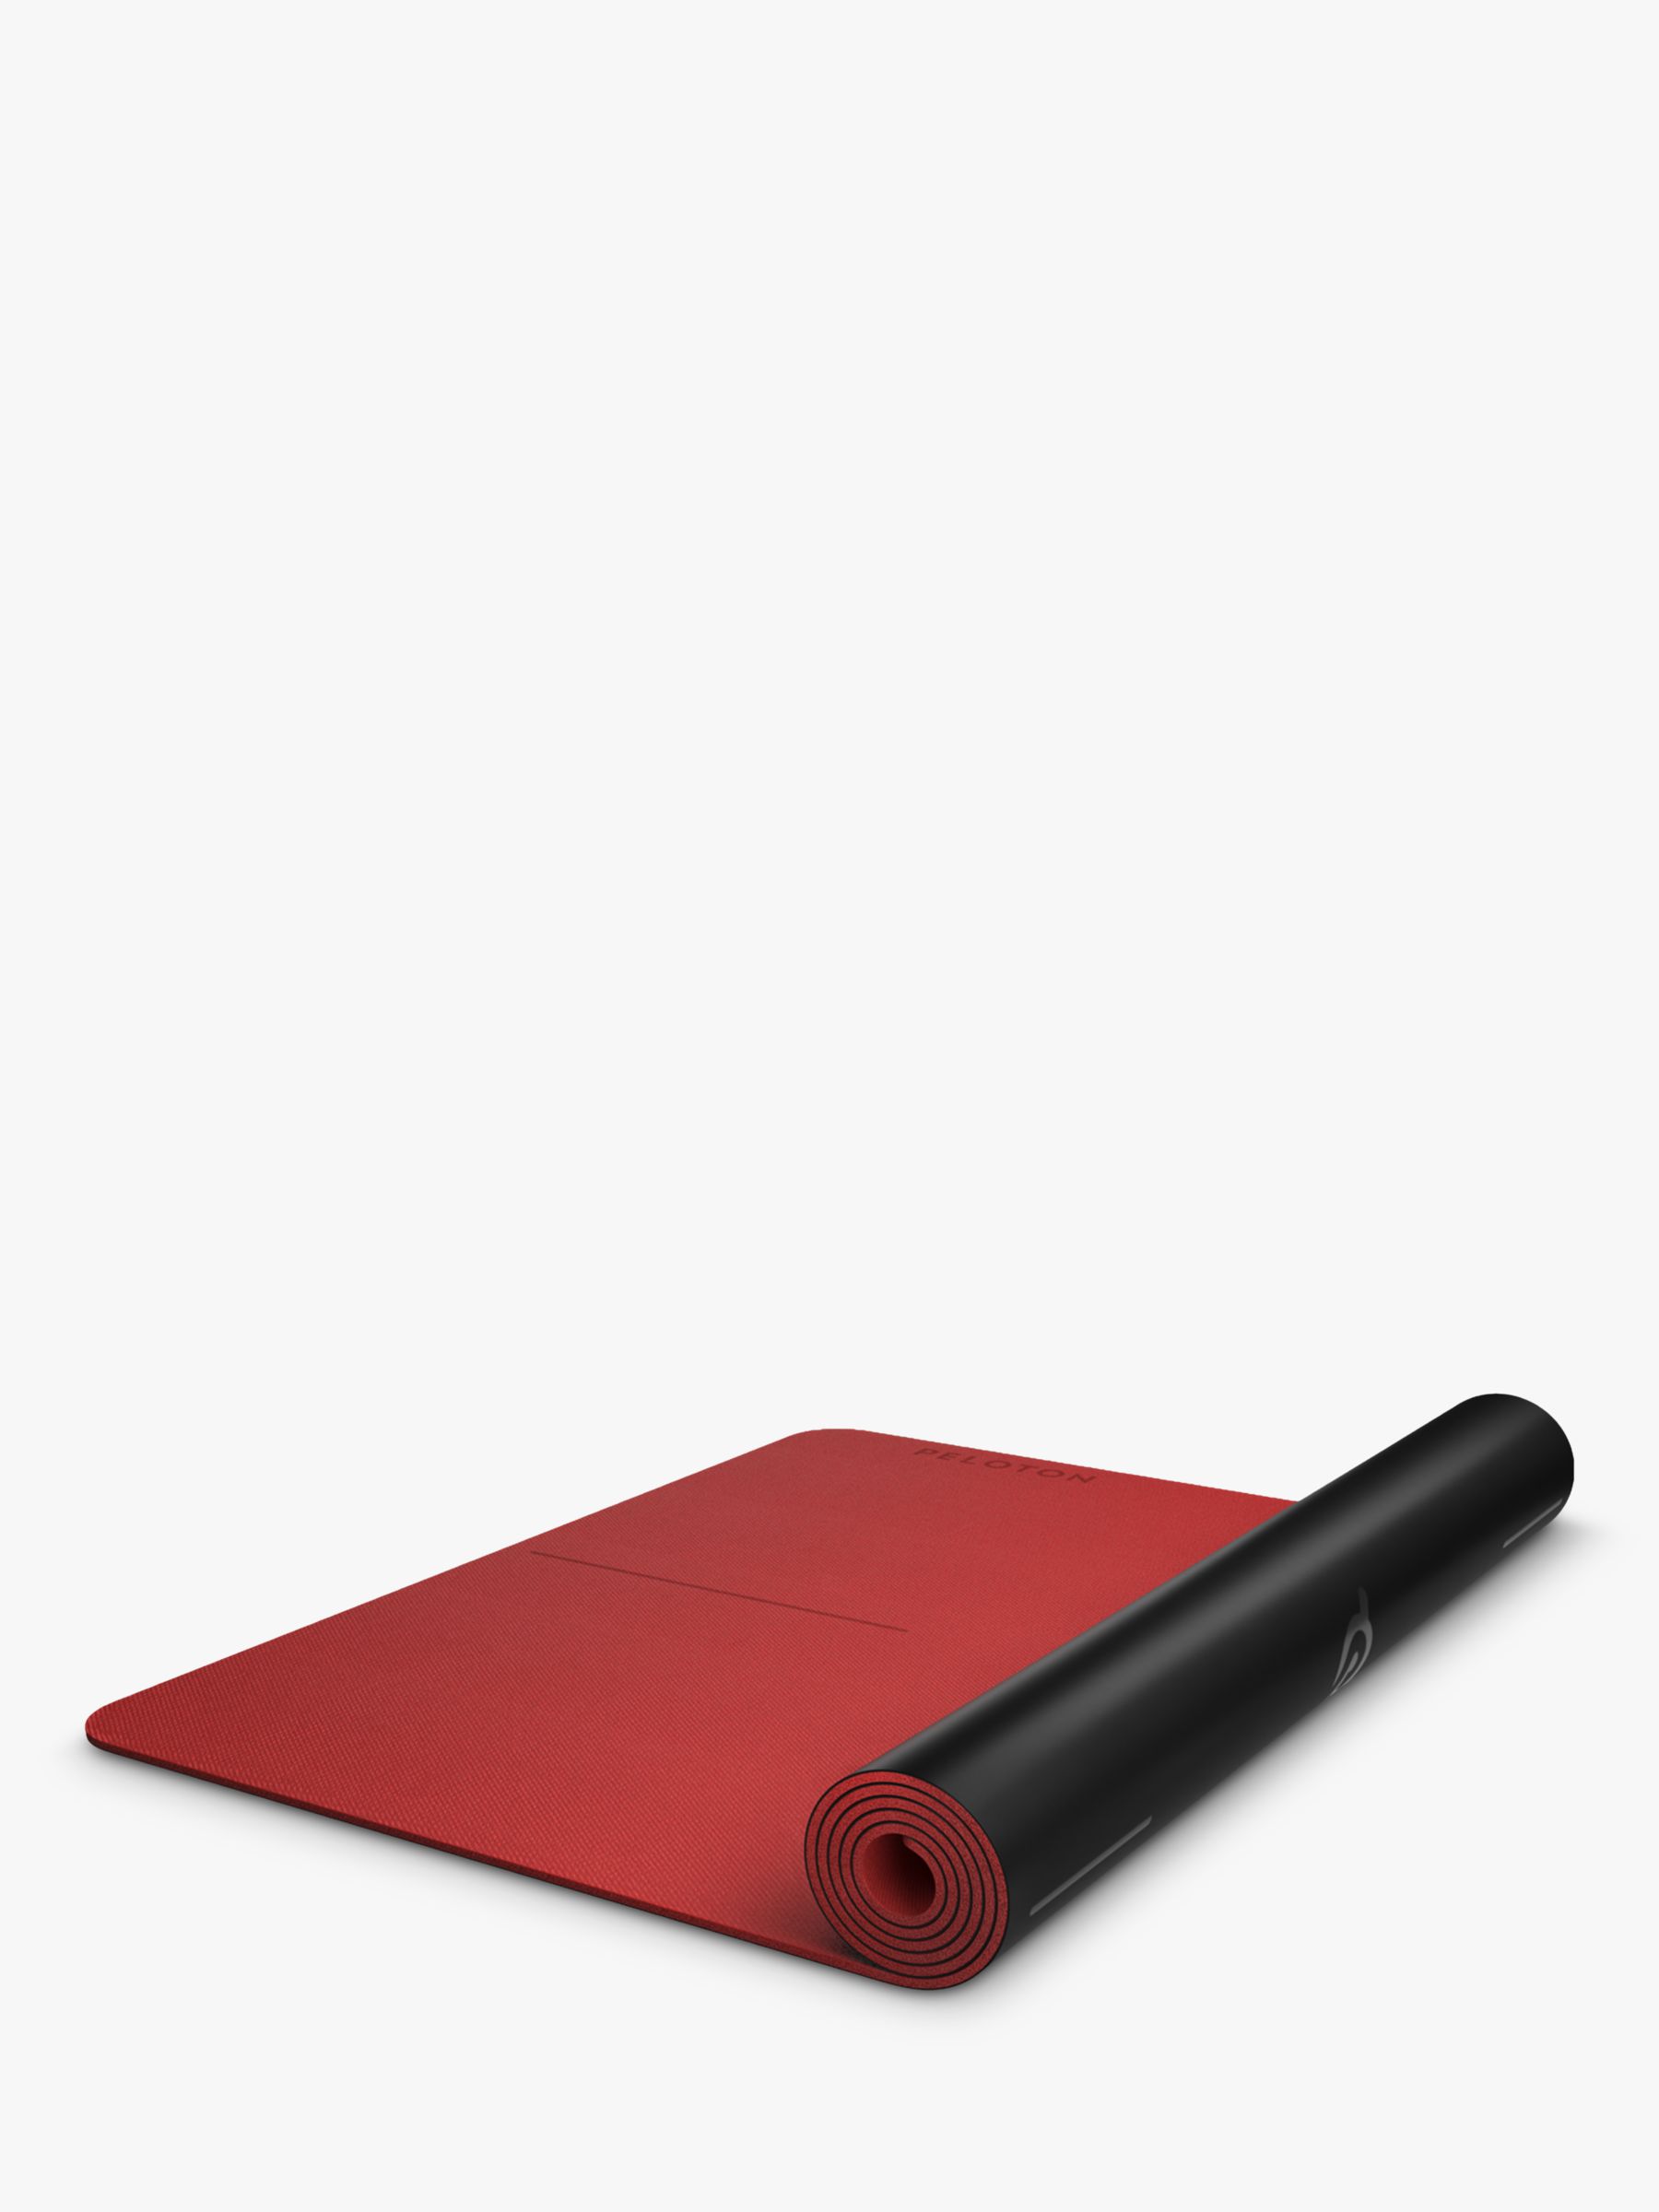 Myga Yoga Set - Yoga Mat, 2 Yoga Blocks and Yoga Strap - Starter Kit for  Pilates, Yoga, Exercise & Fitness at Home, Gym, Studio - Turquoise